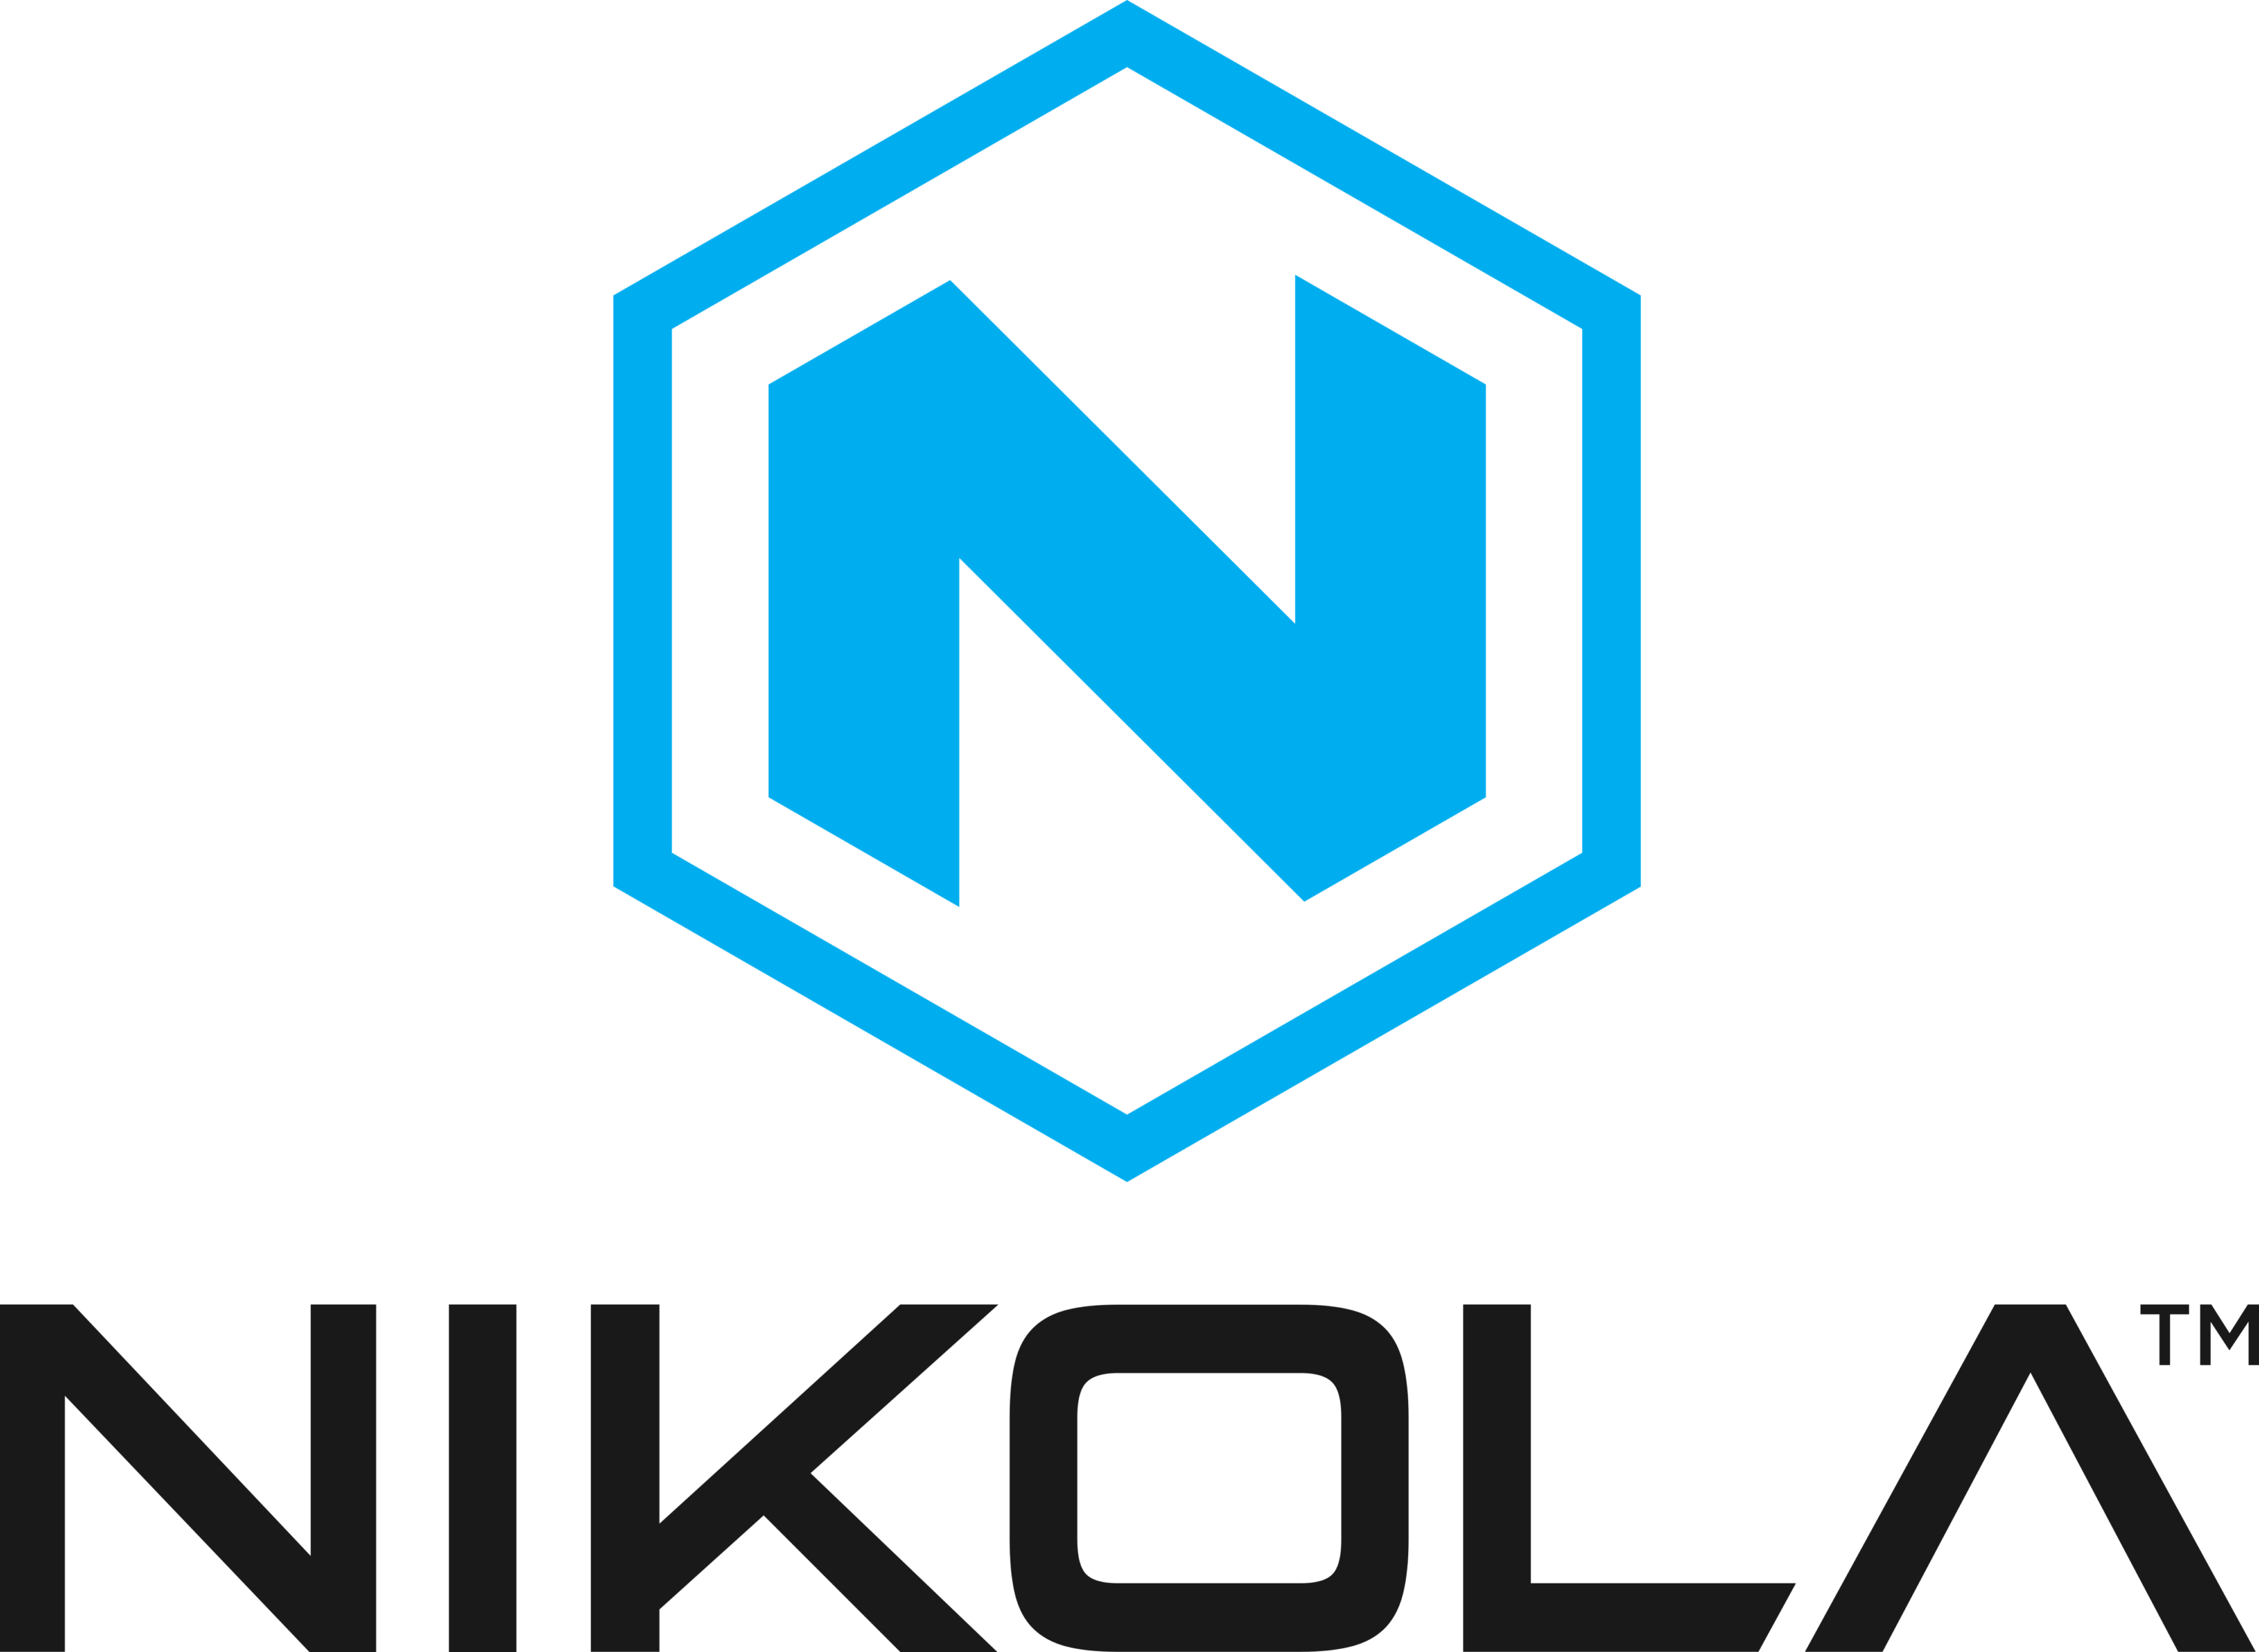 Nikola Motor Company Logo vertically